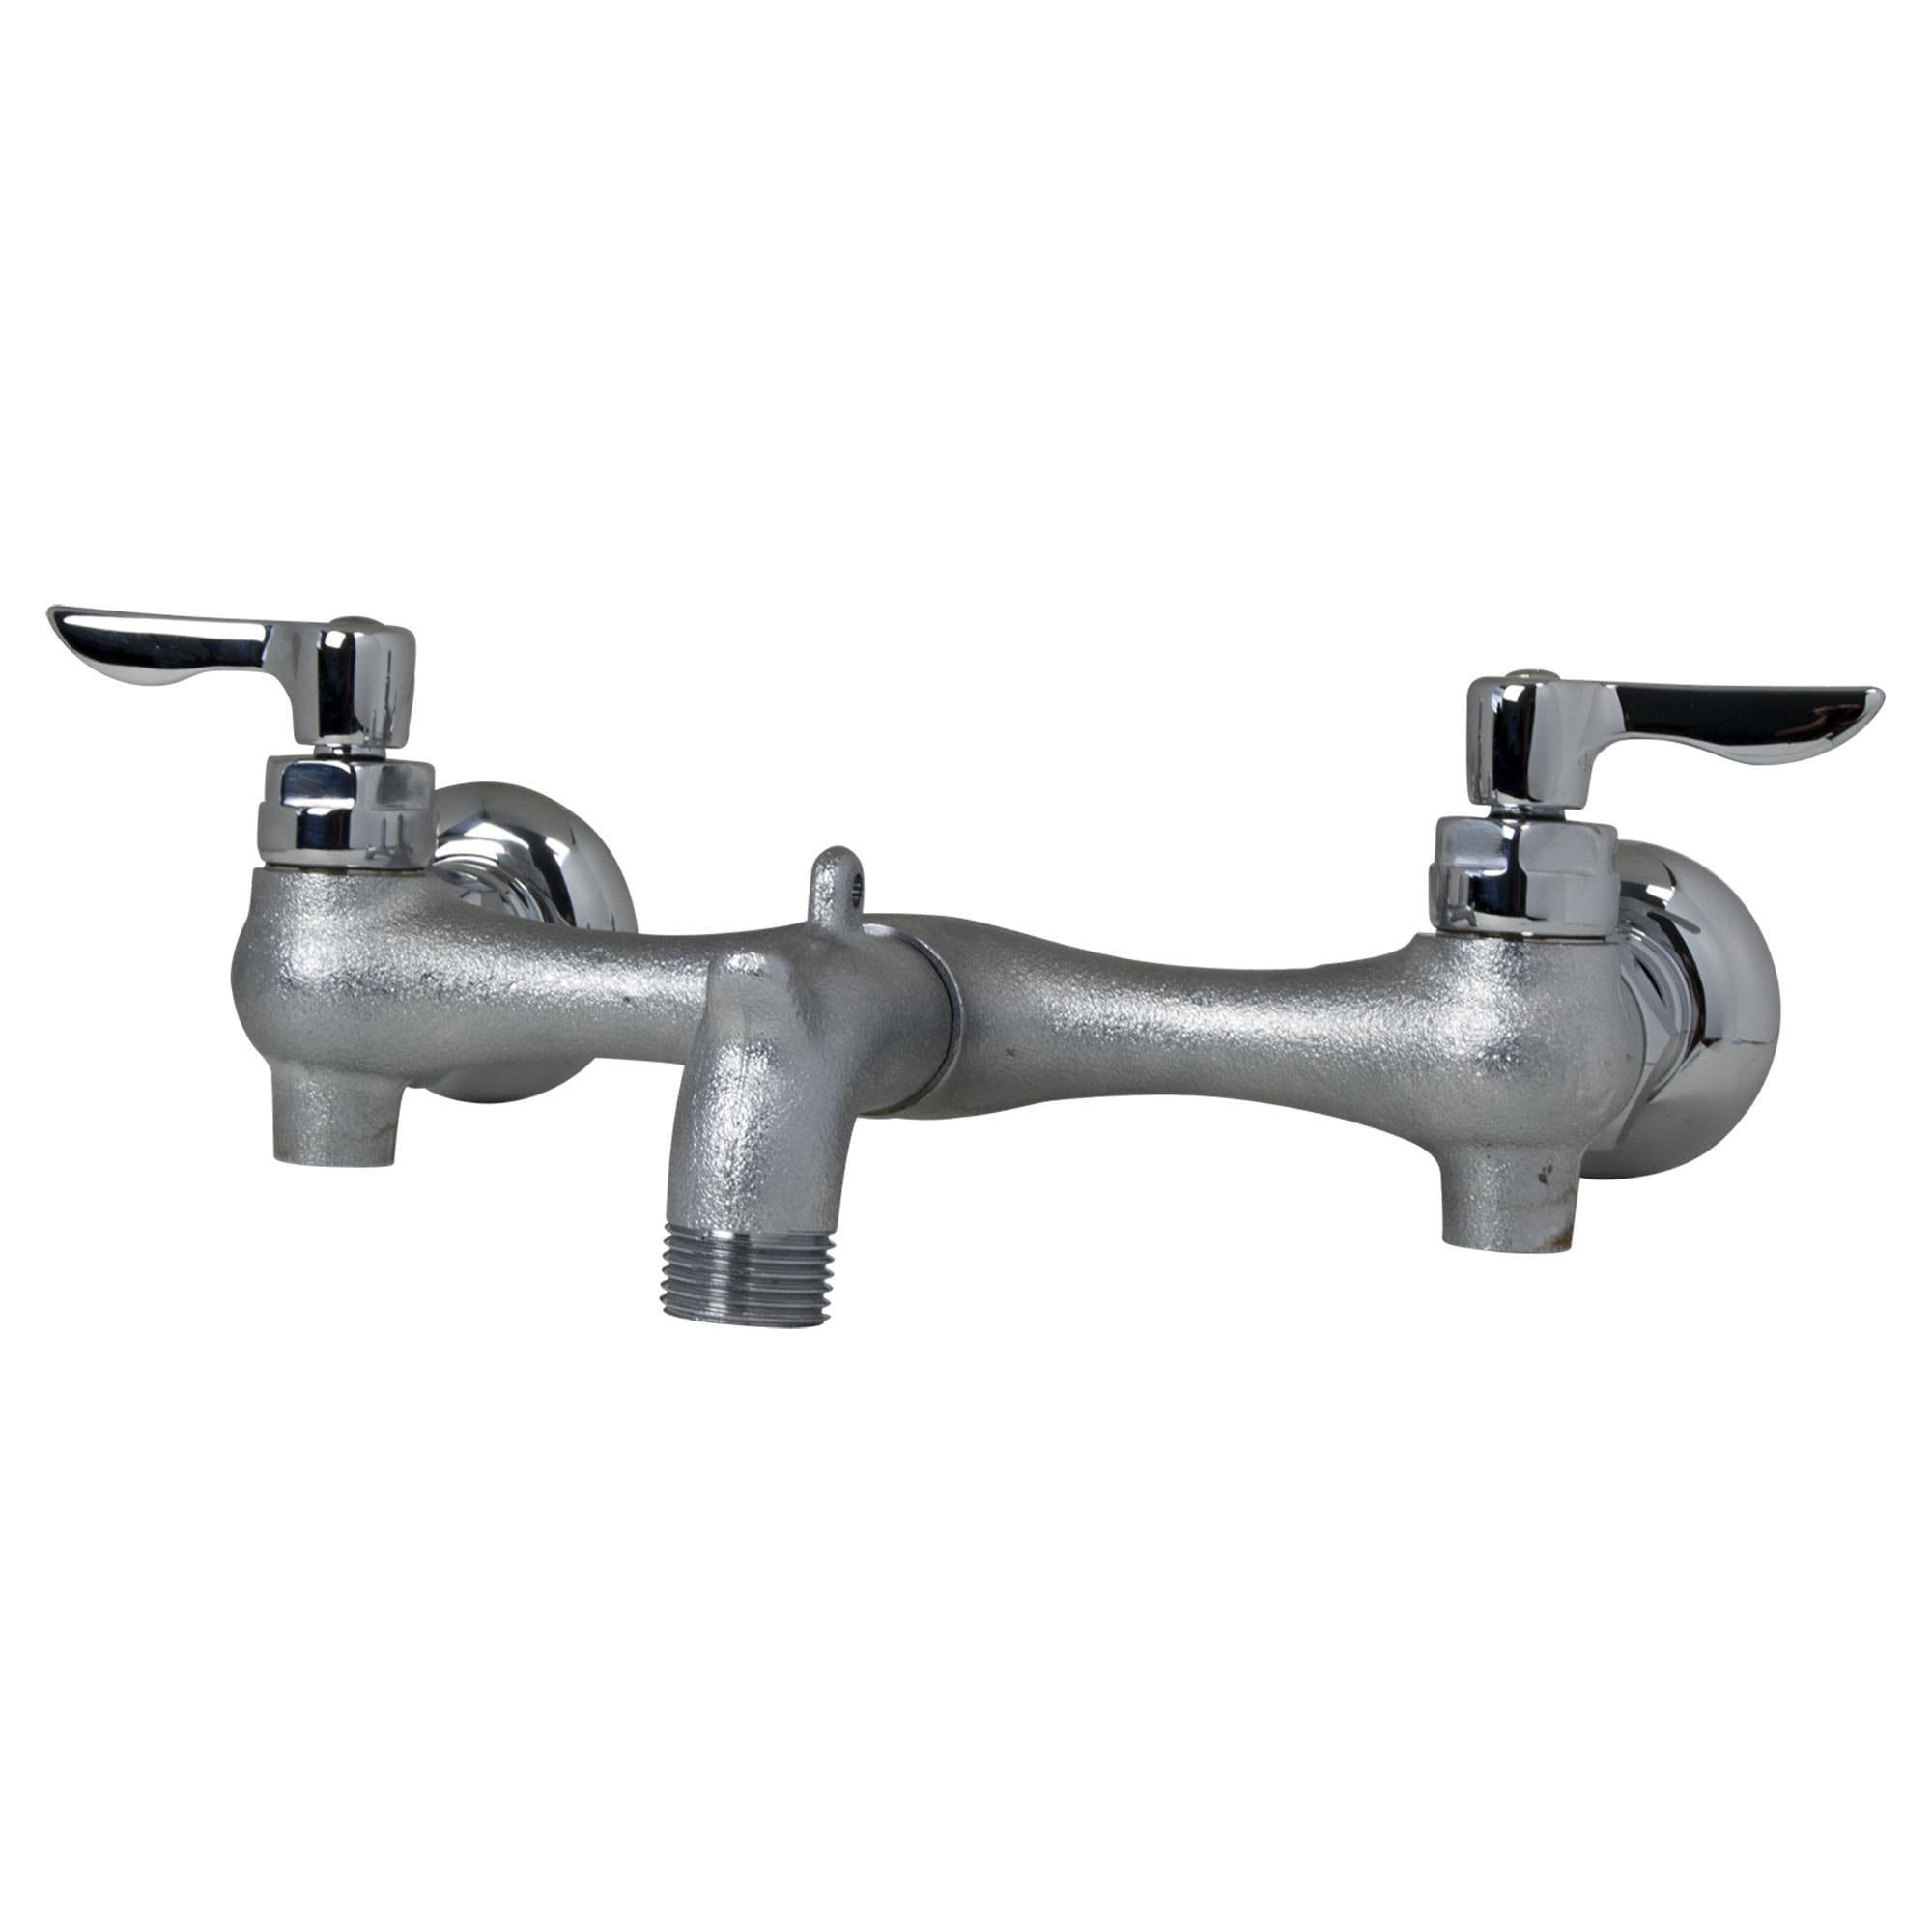 AMERICAN STANDARD 8350235.004 Rigid Utility Sink Faucet Rough Chrome 2 Holes, 